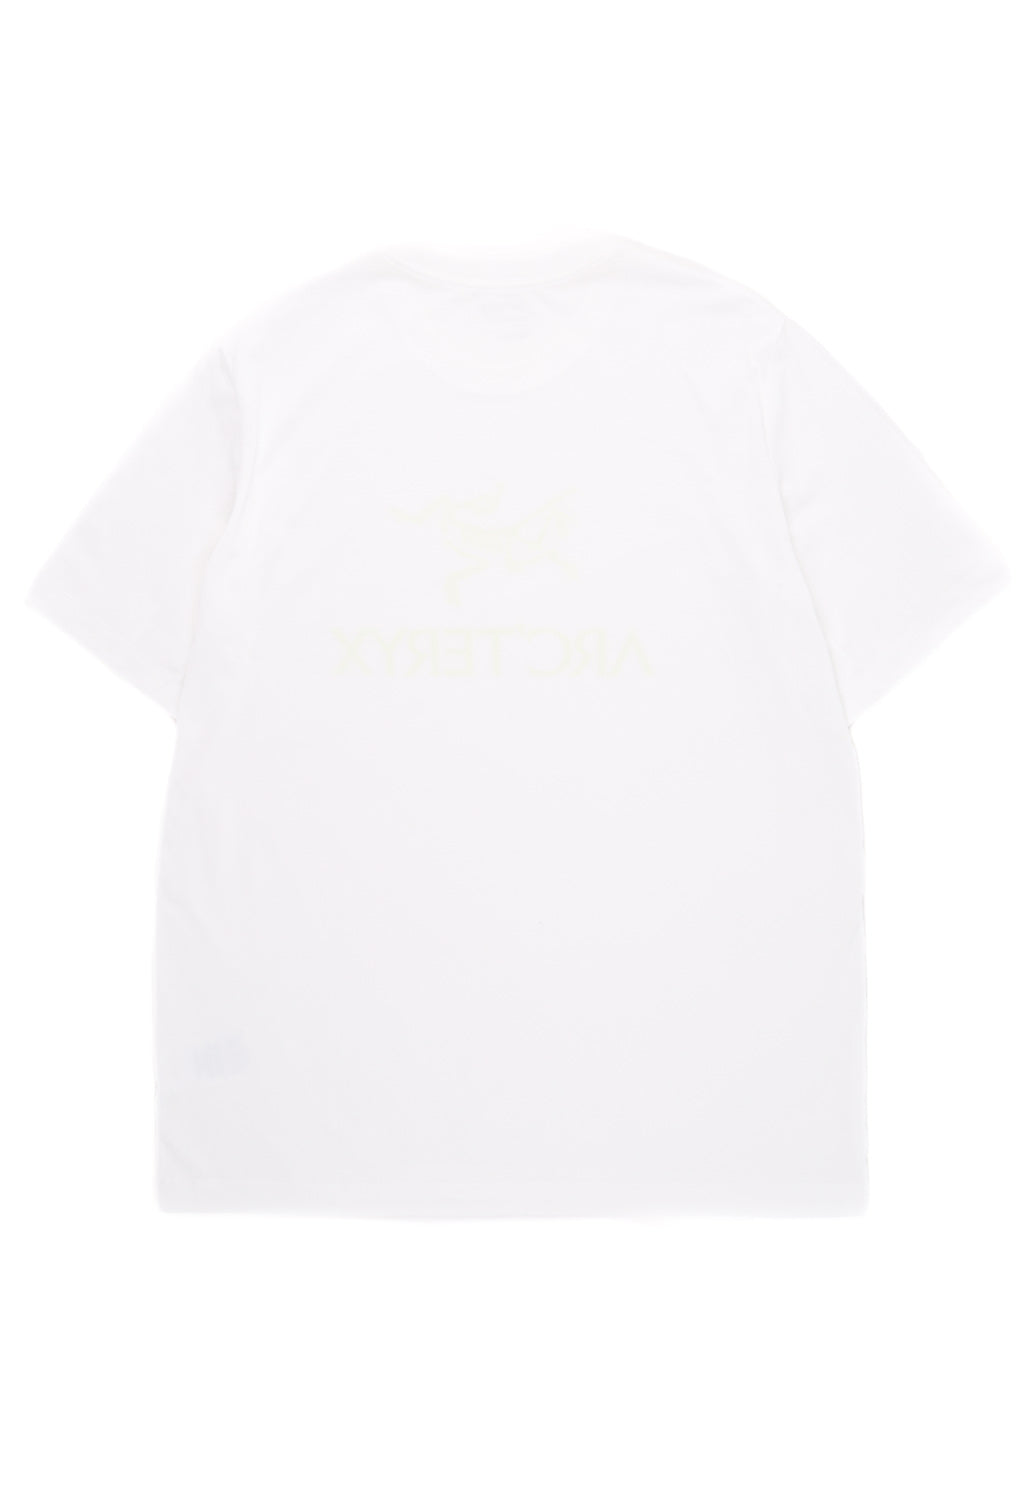 Arc'teryx Men's Arc'Word Logo T-Shirt - White Light